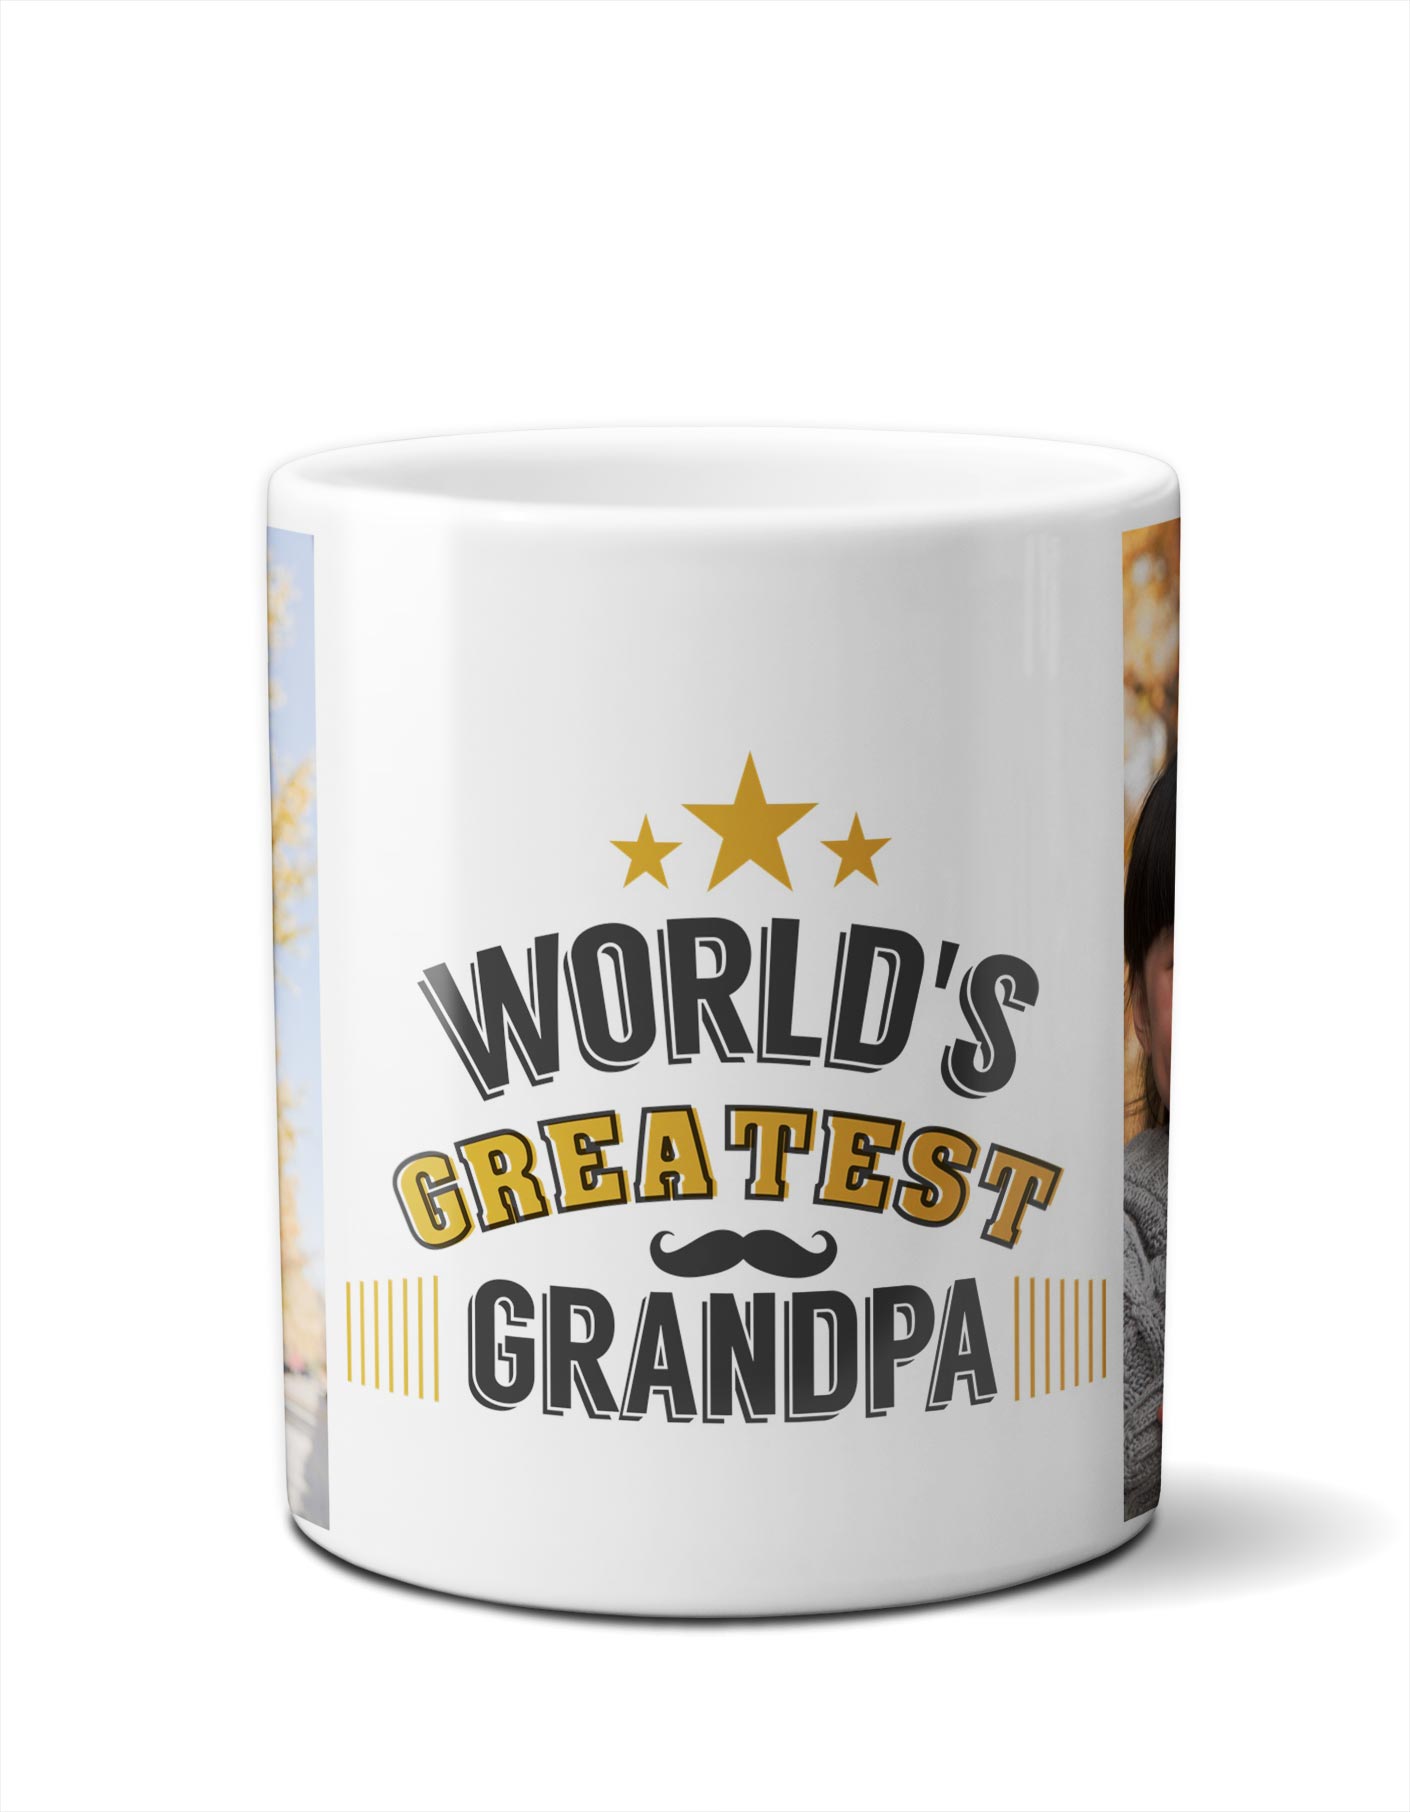 https://www.goodprints.com/wp-content/uploads/2018/12/worlds-greatest-grandpa-mug-center-1.jpg